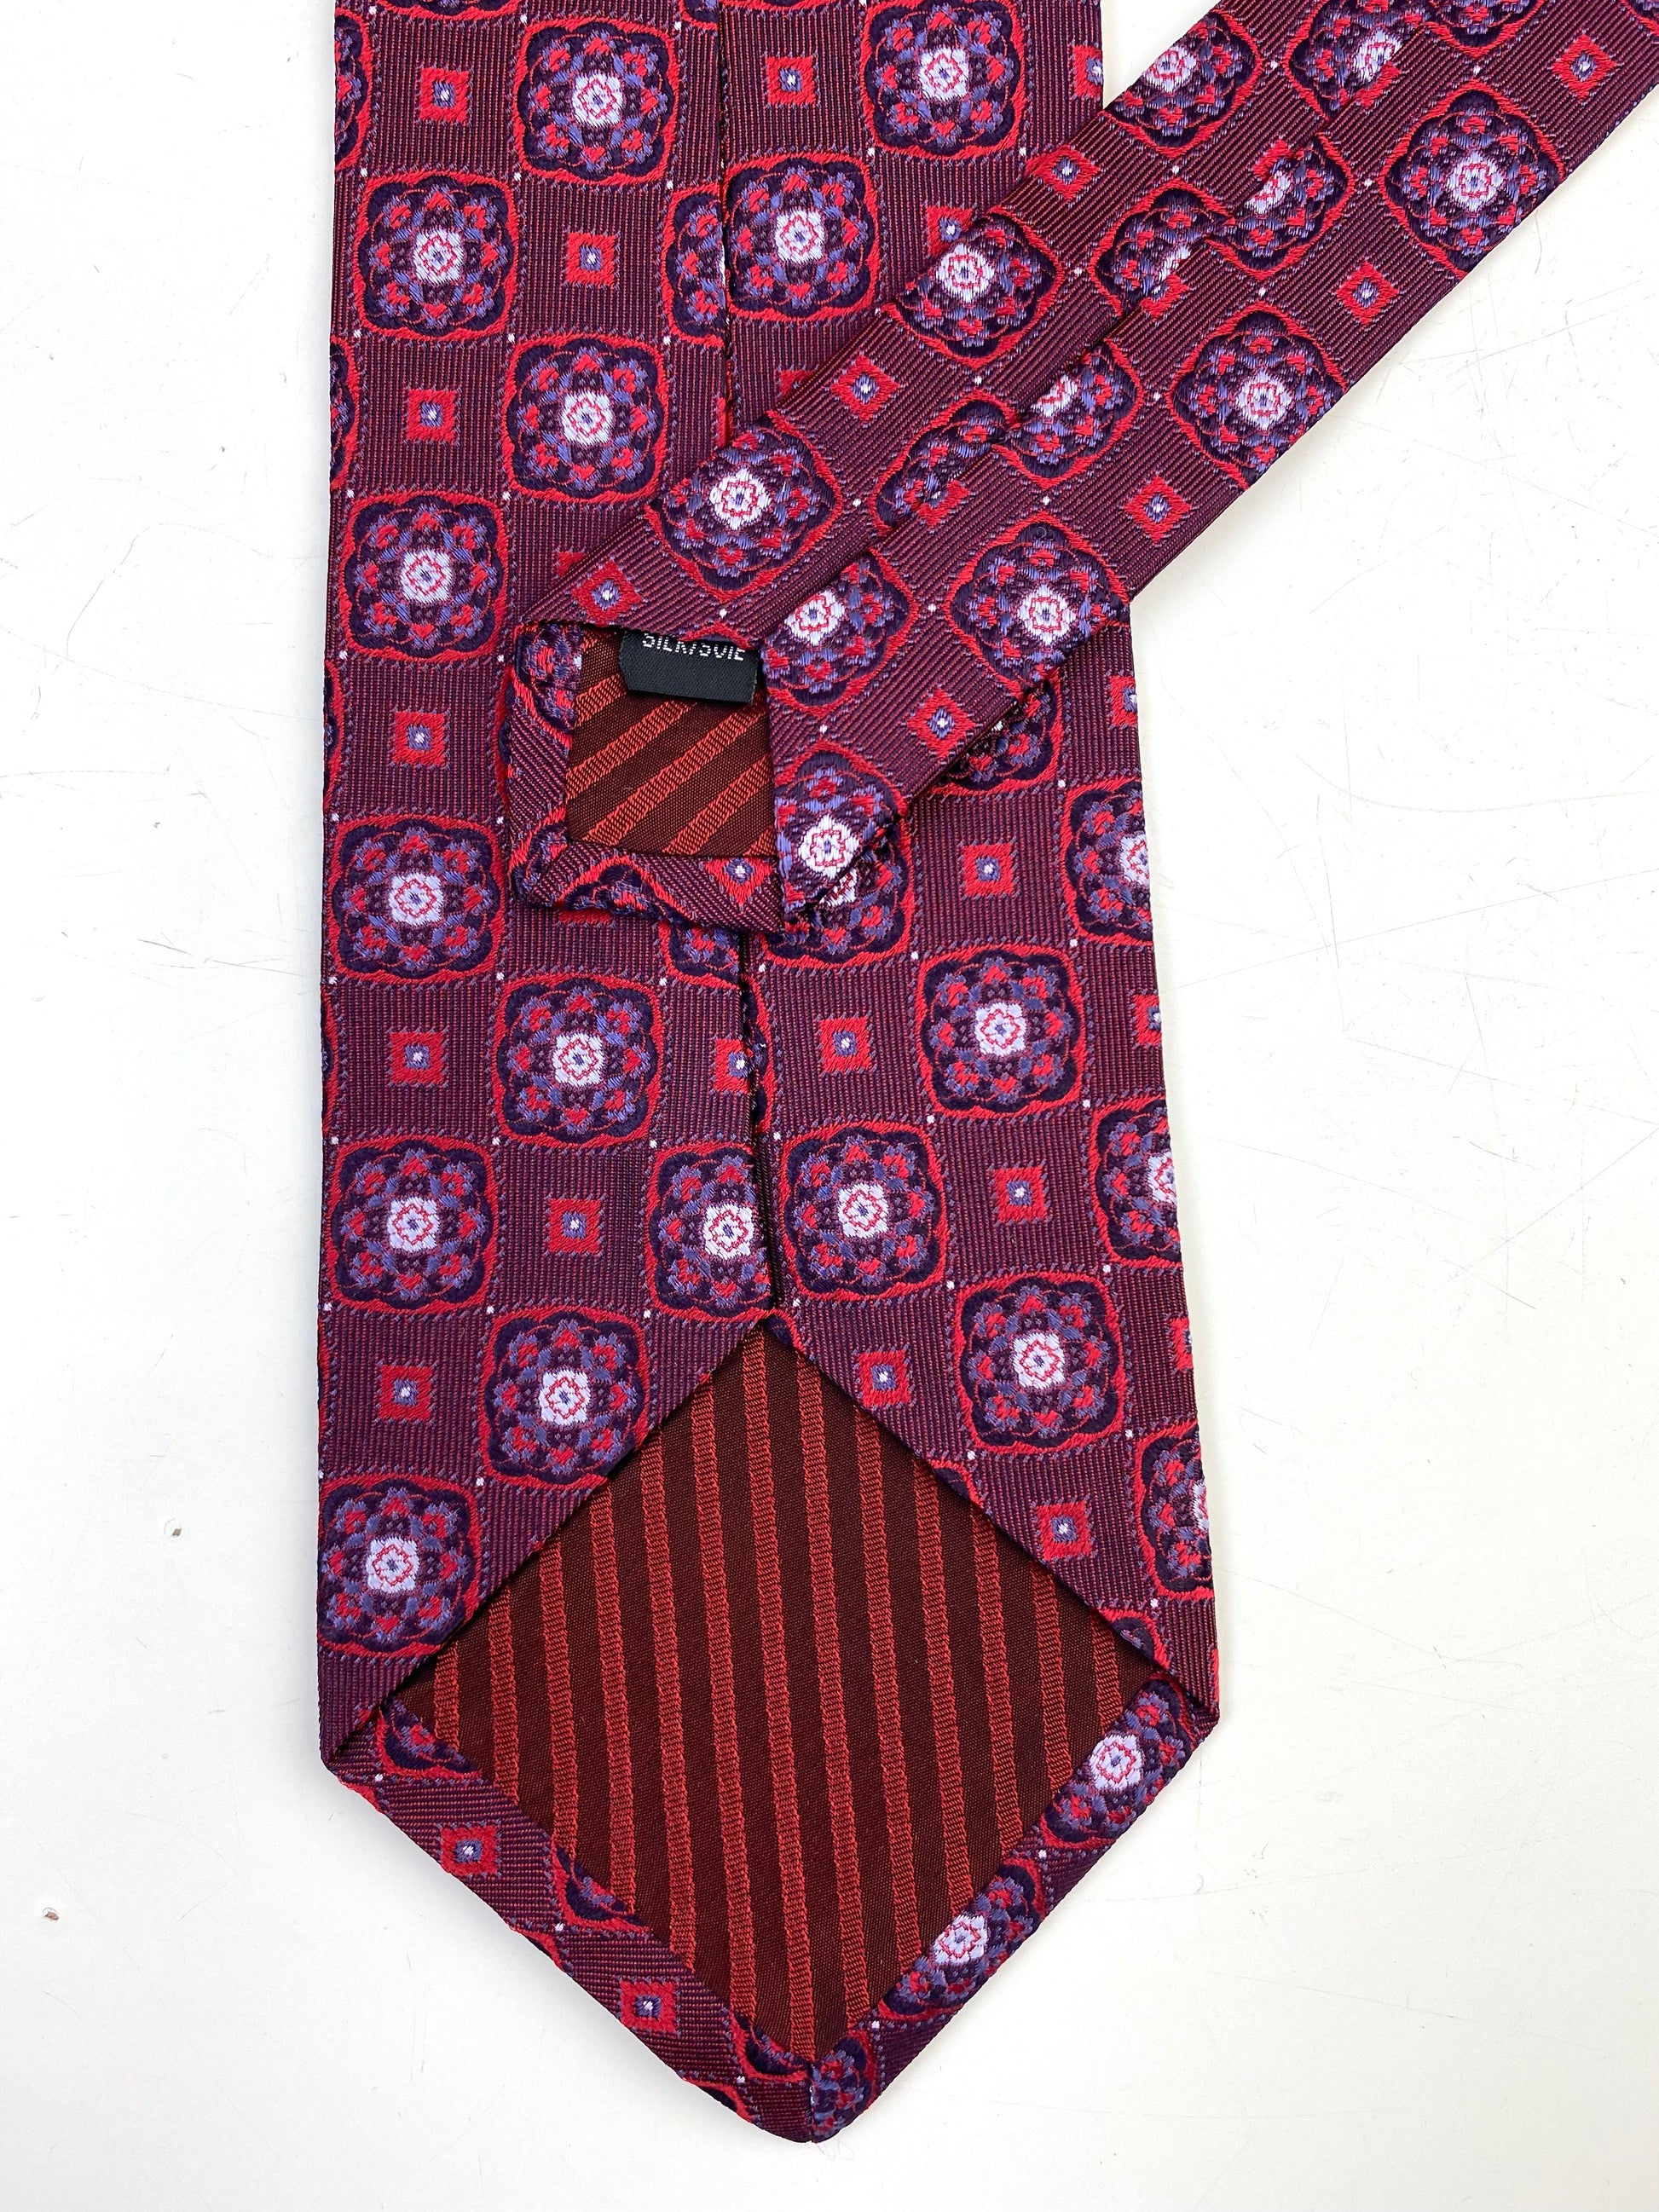 90s Deadstock Silk Necktie, Men's Vintage Wine/ Purple Moroccan Medallion Pattern Tie, NOS